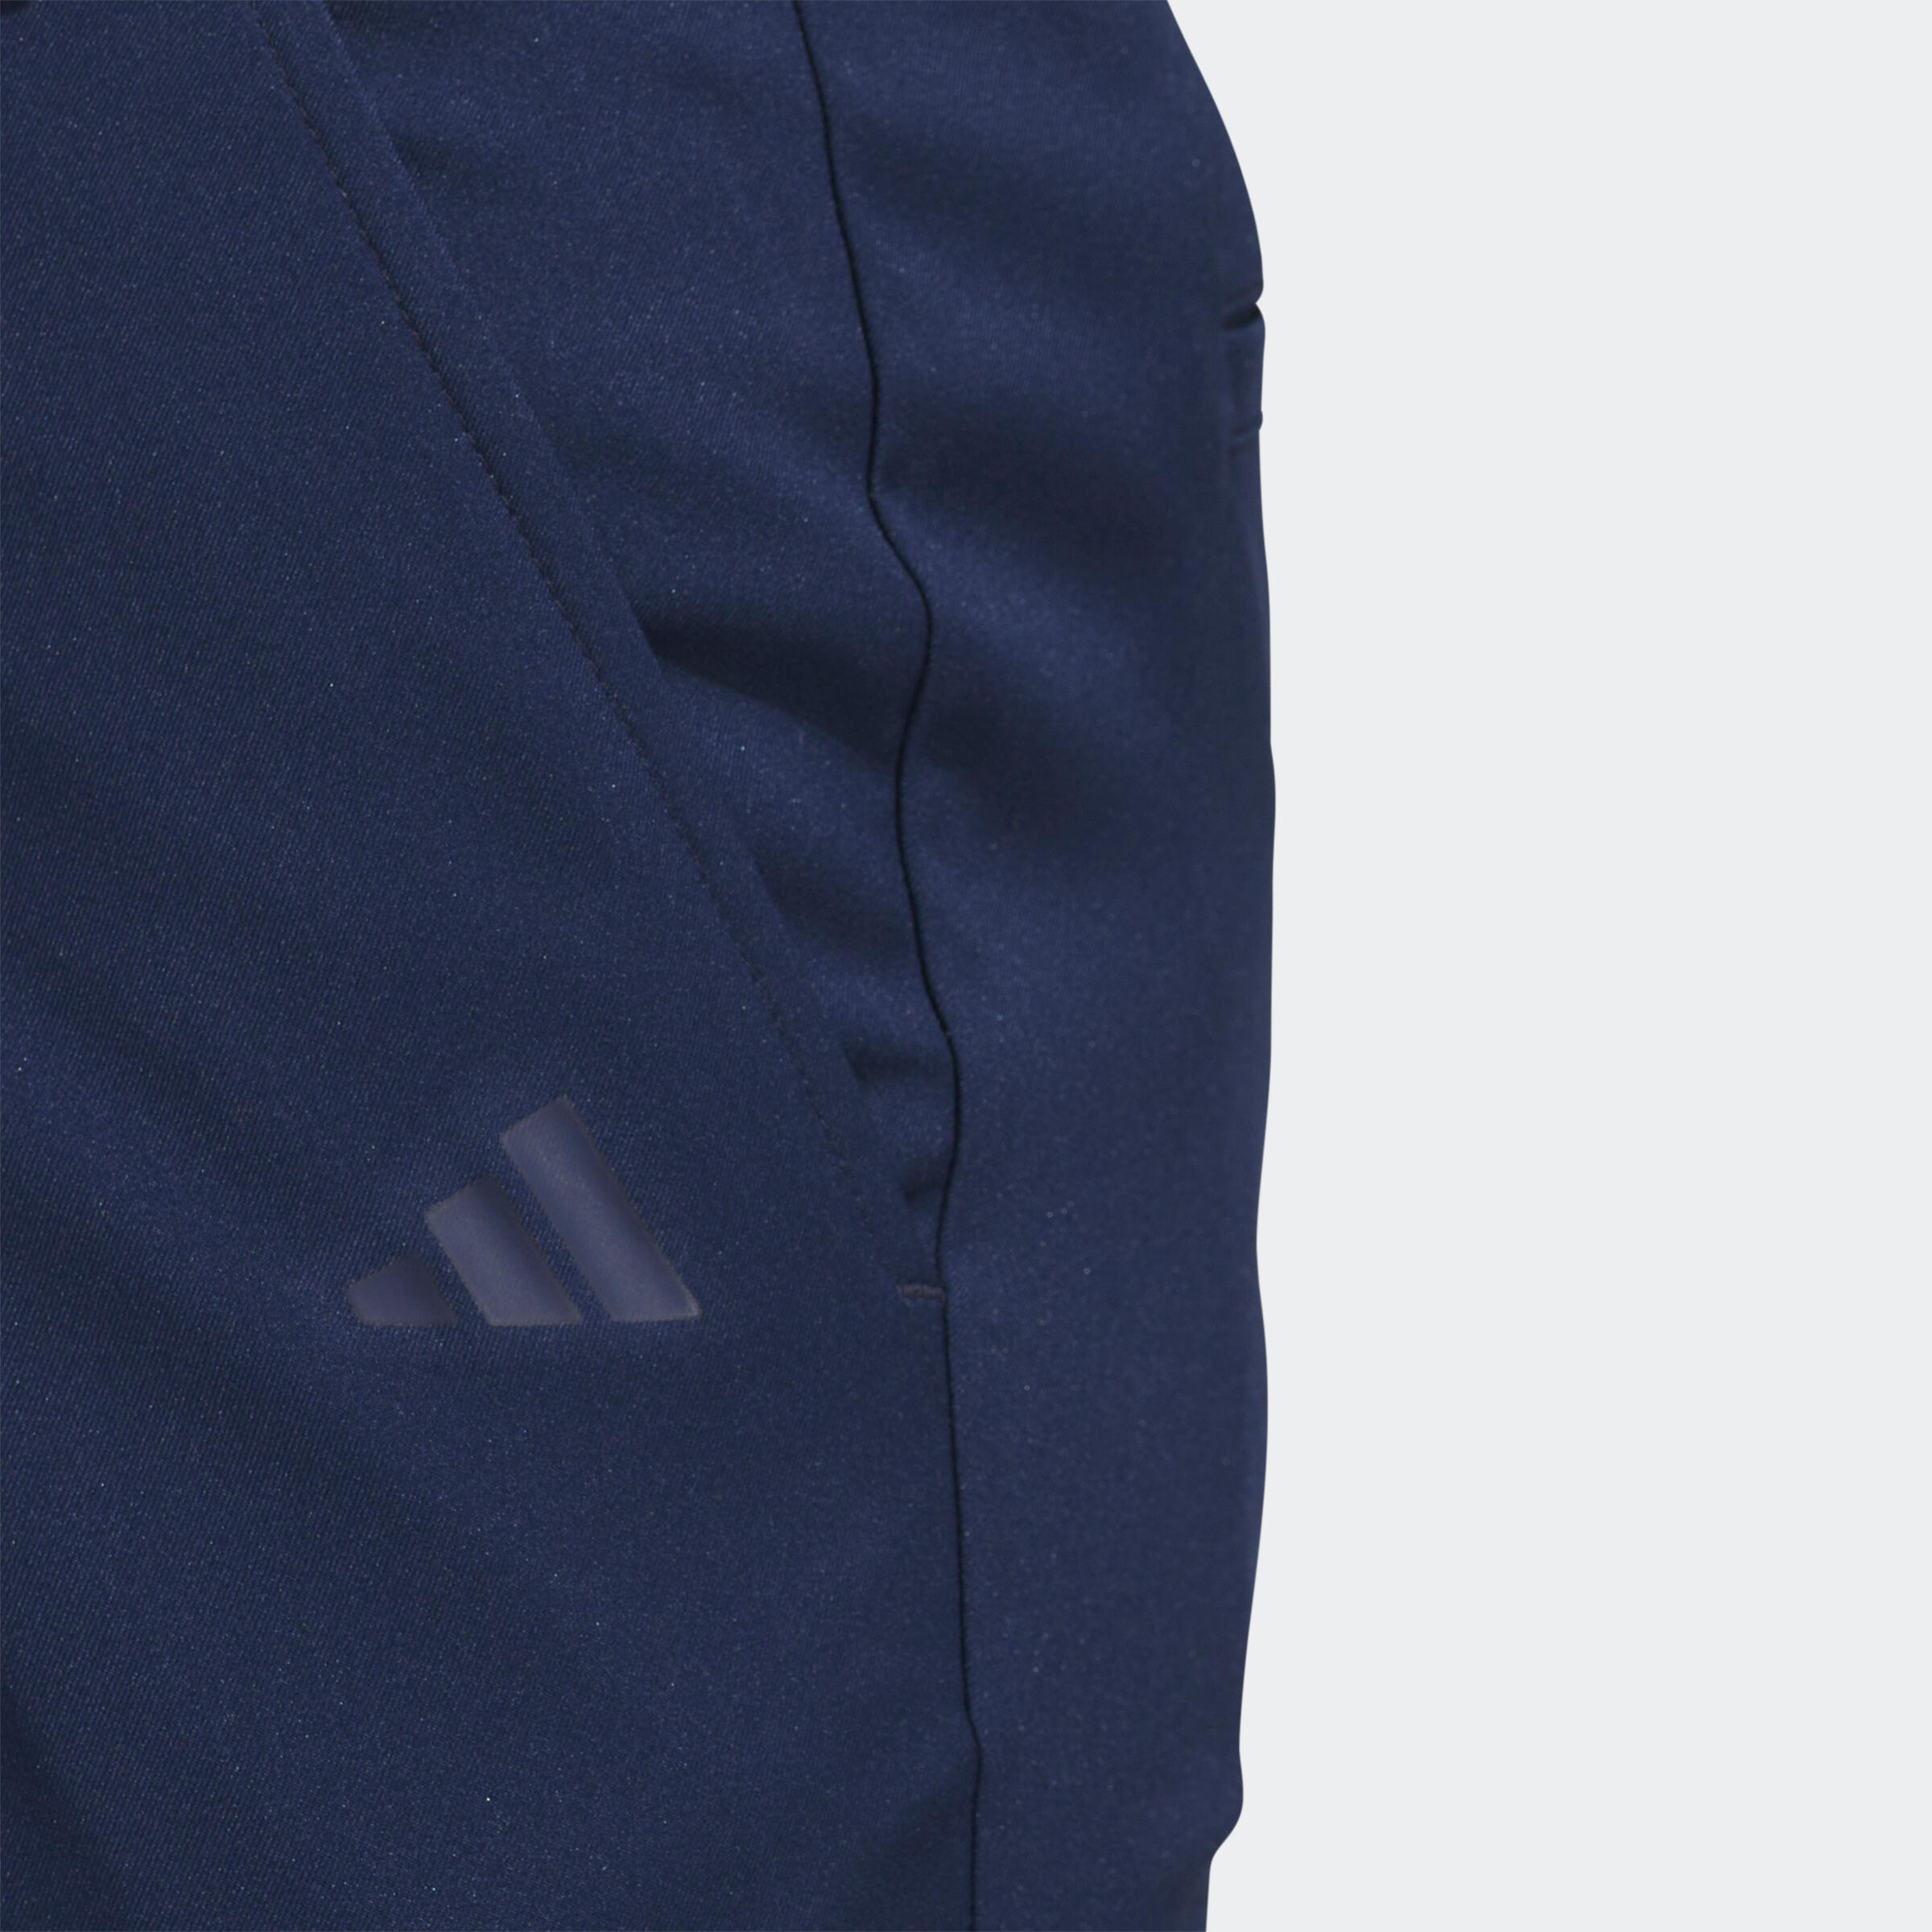 Men's golf trousers - Adidas navy blue 4/4